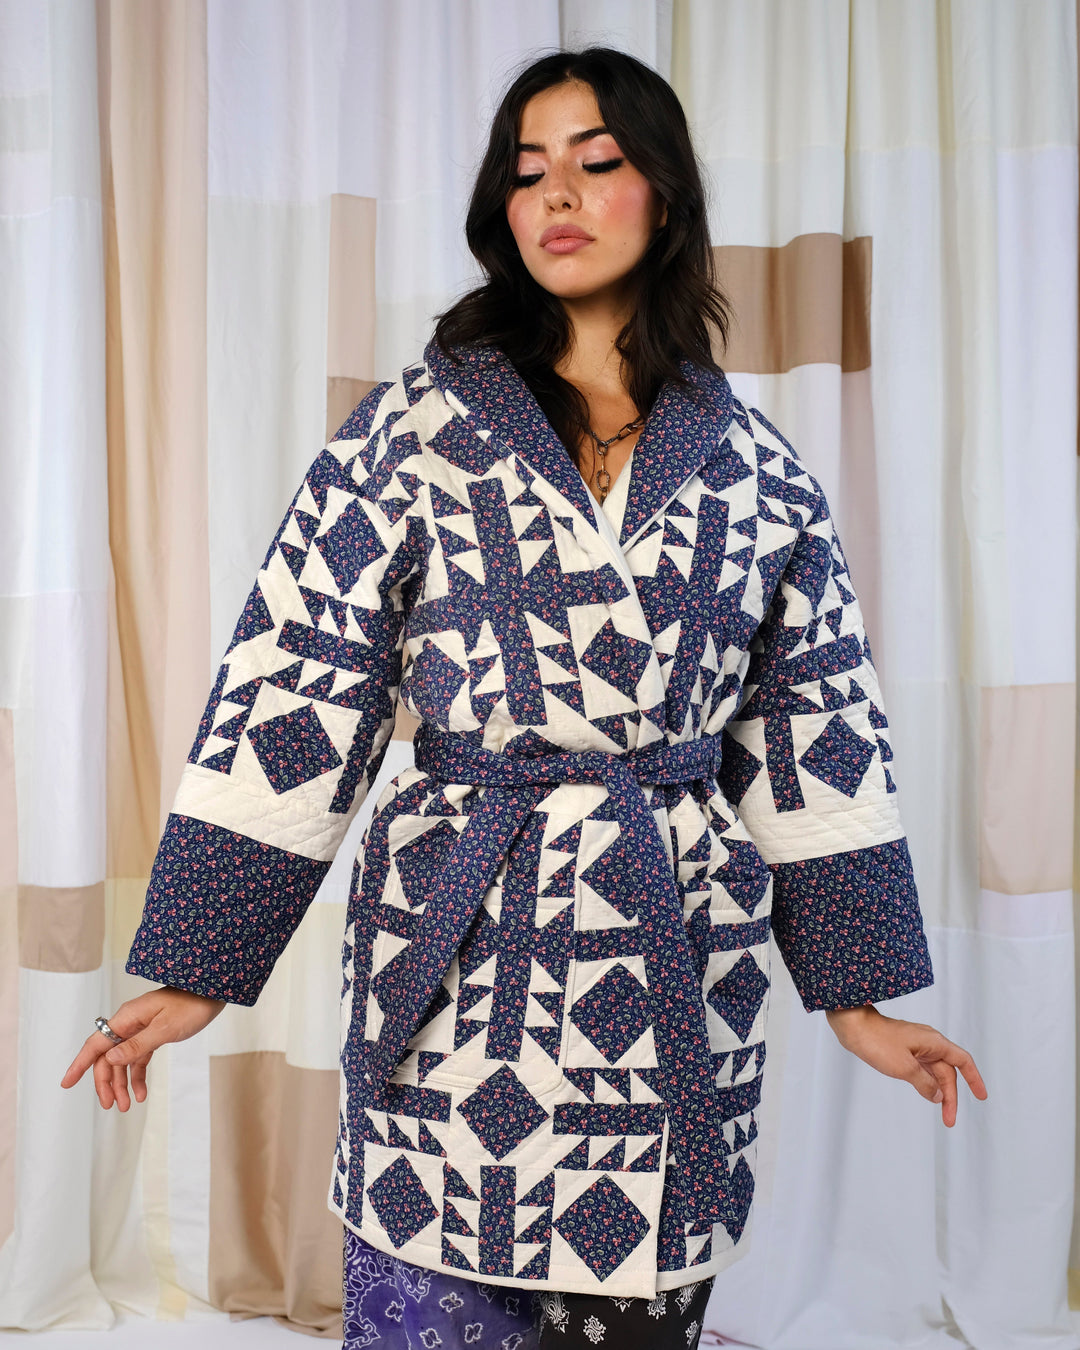 Antique Jacquard Blanket Robe Coat, M/L